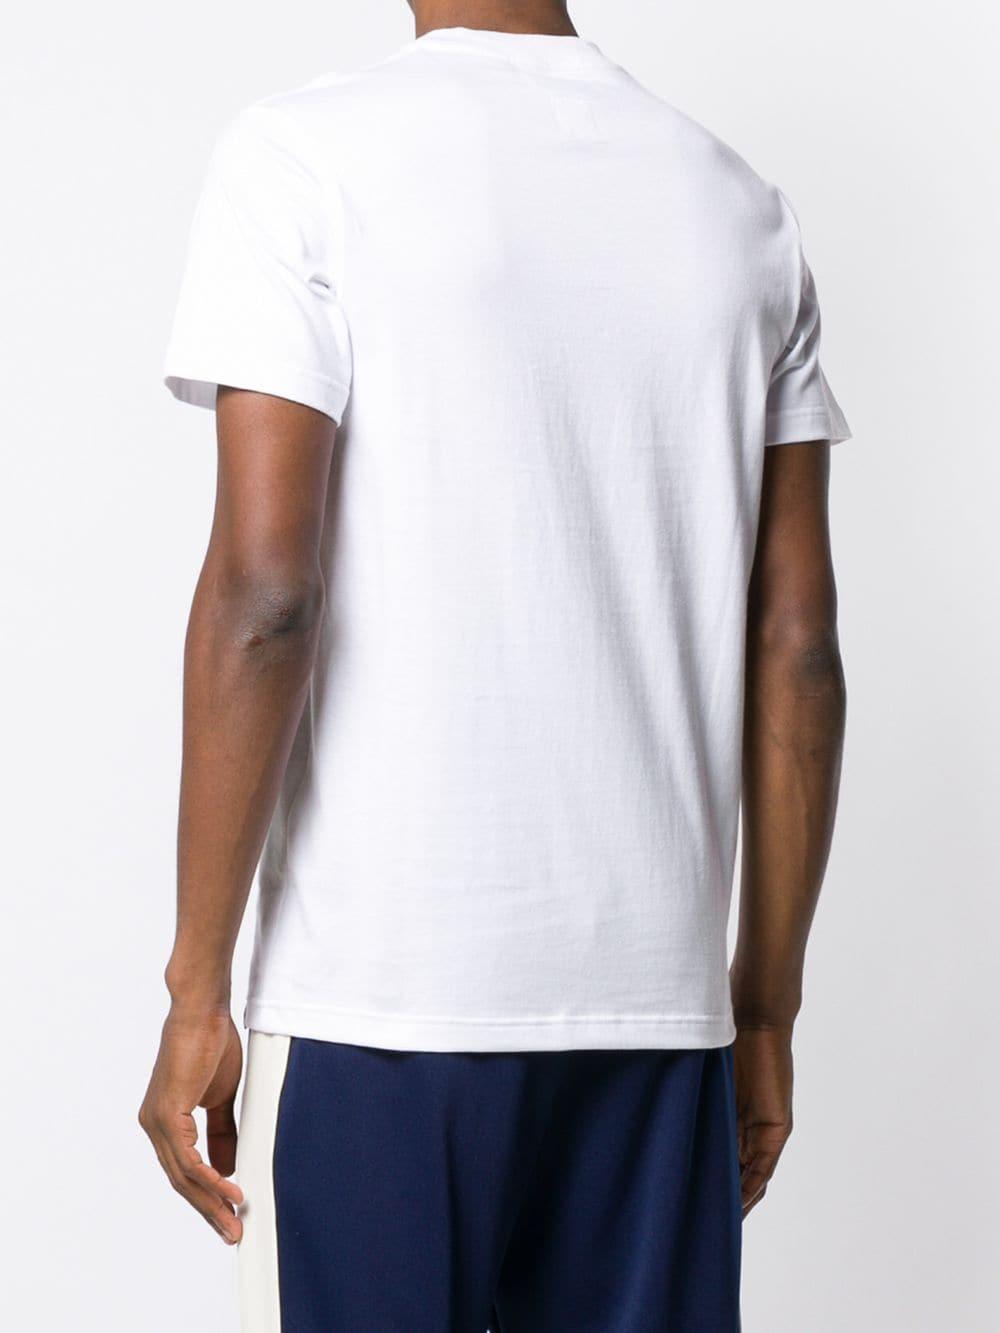 Facetasm Cotton Logo Print T-shirt in White for Men - Save 43% - Lyst